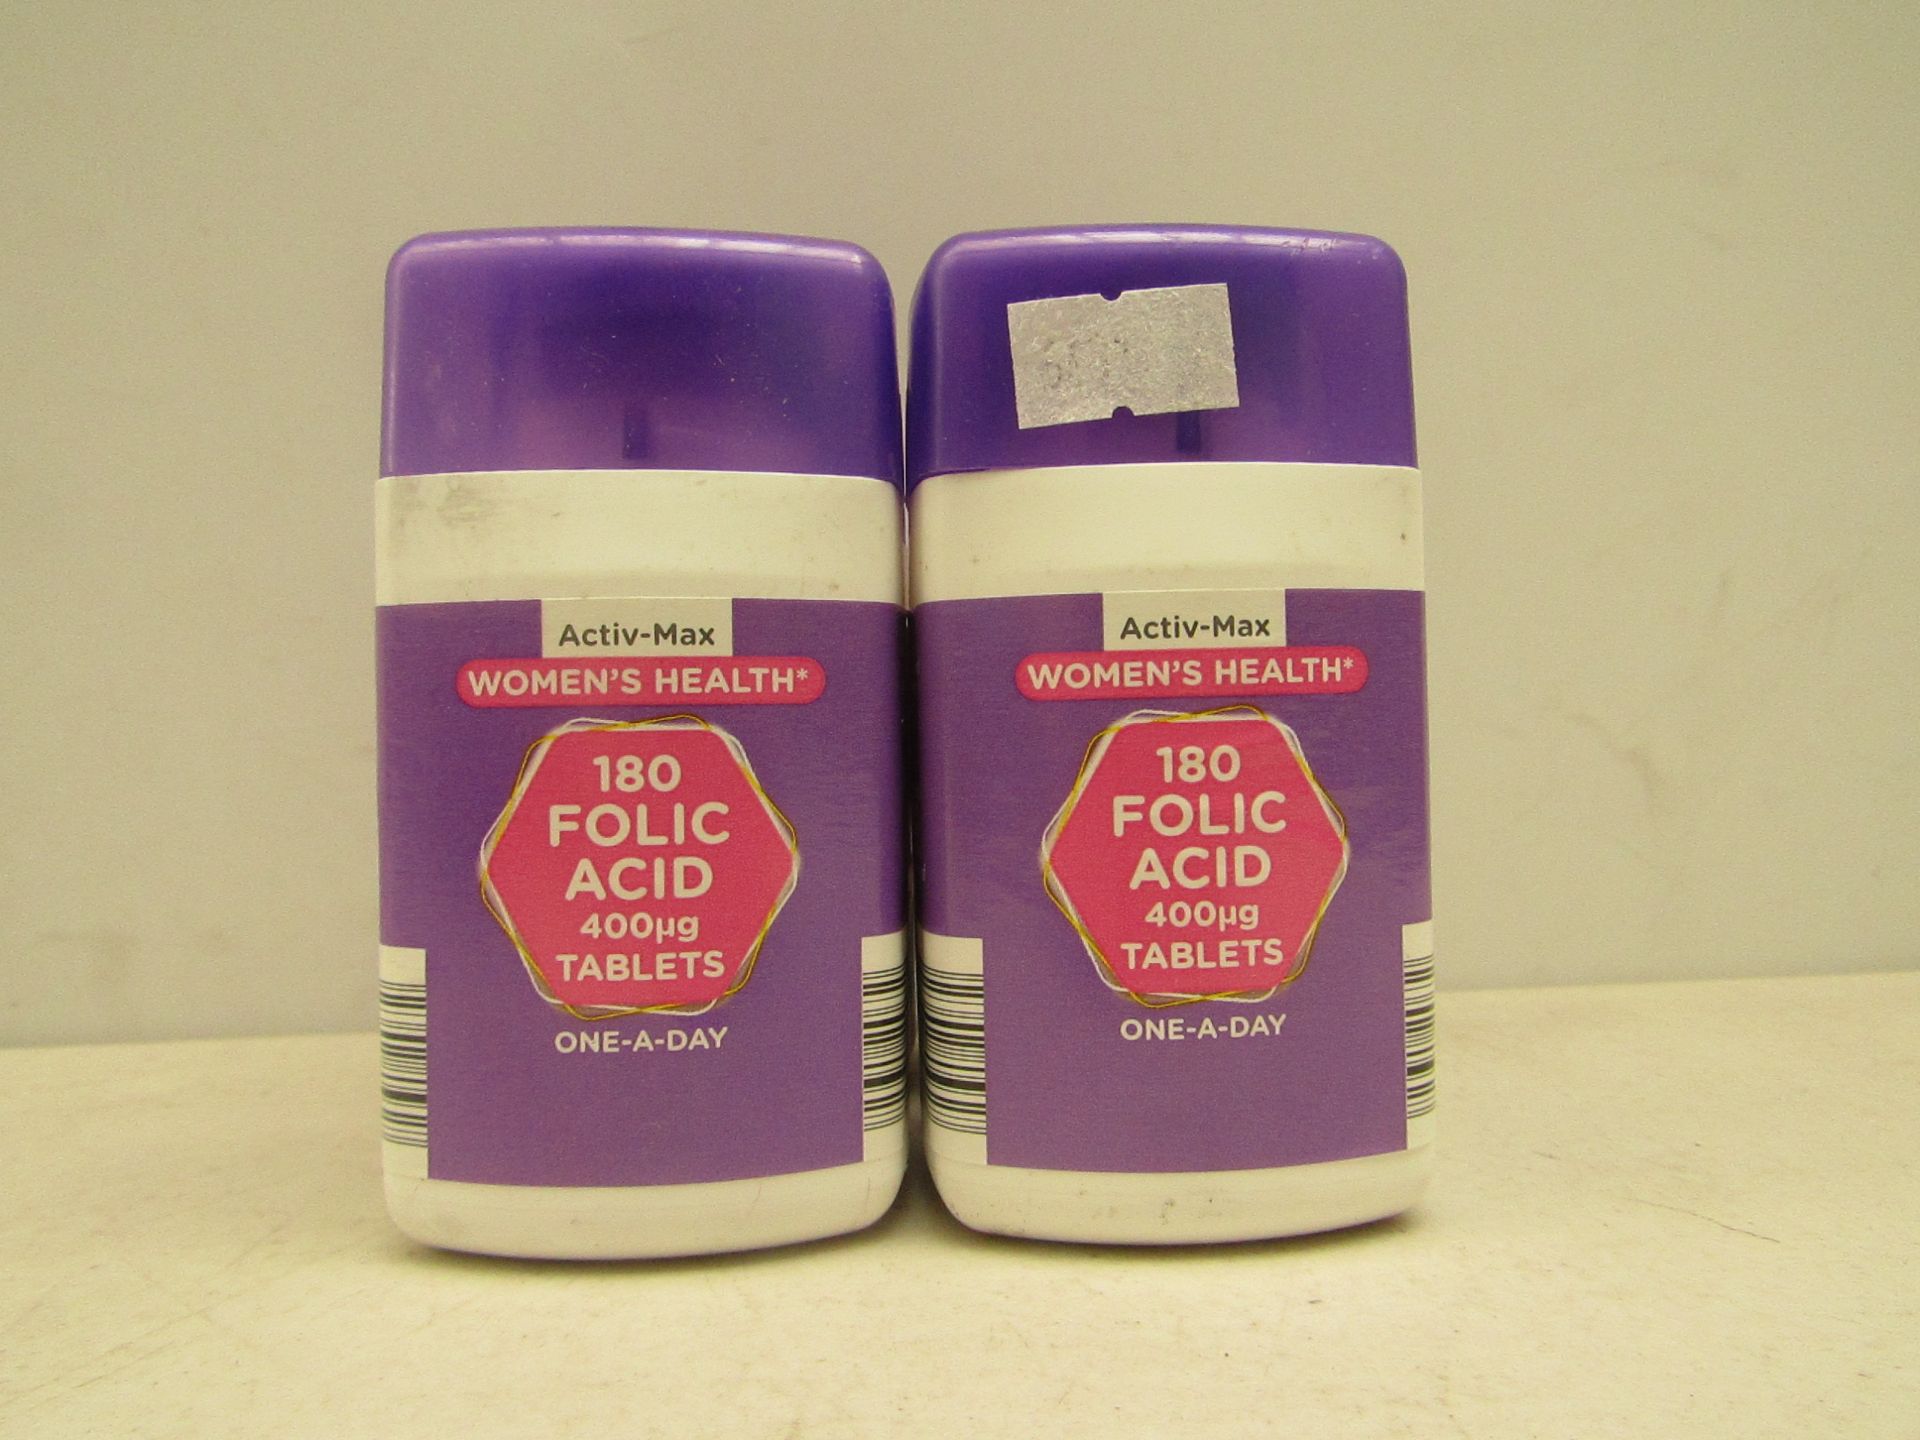 4x packs of Activ-max 180 folic acid tablets, new.